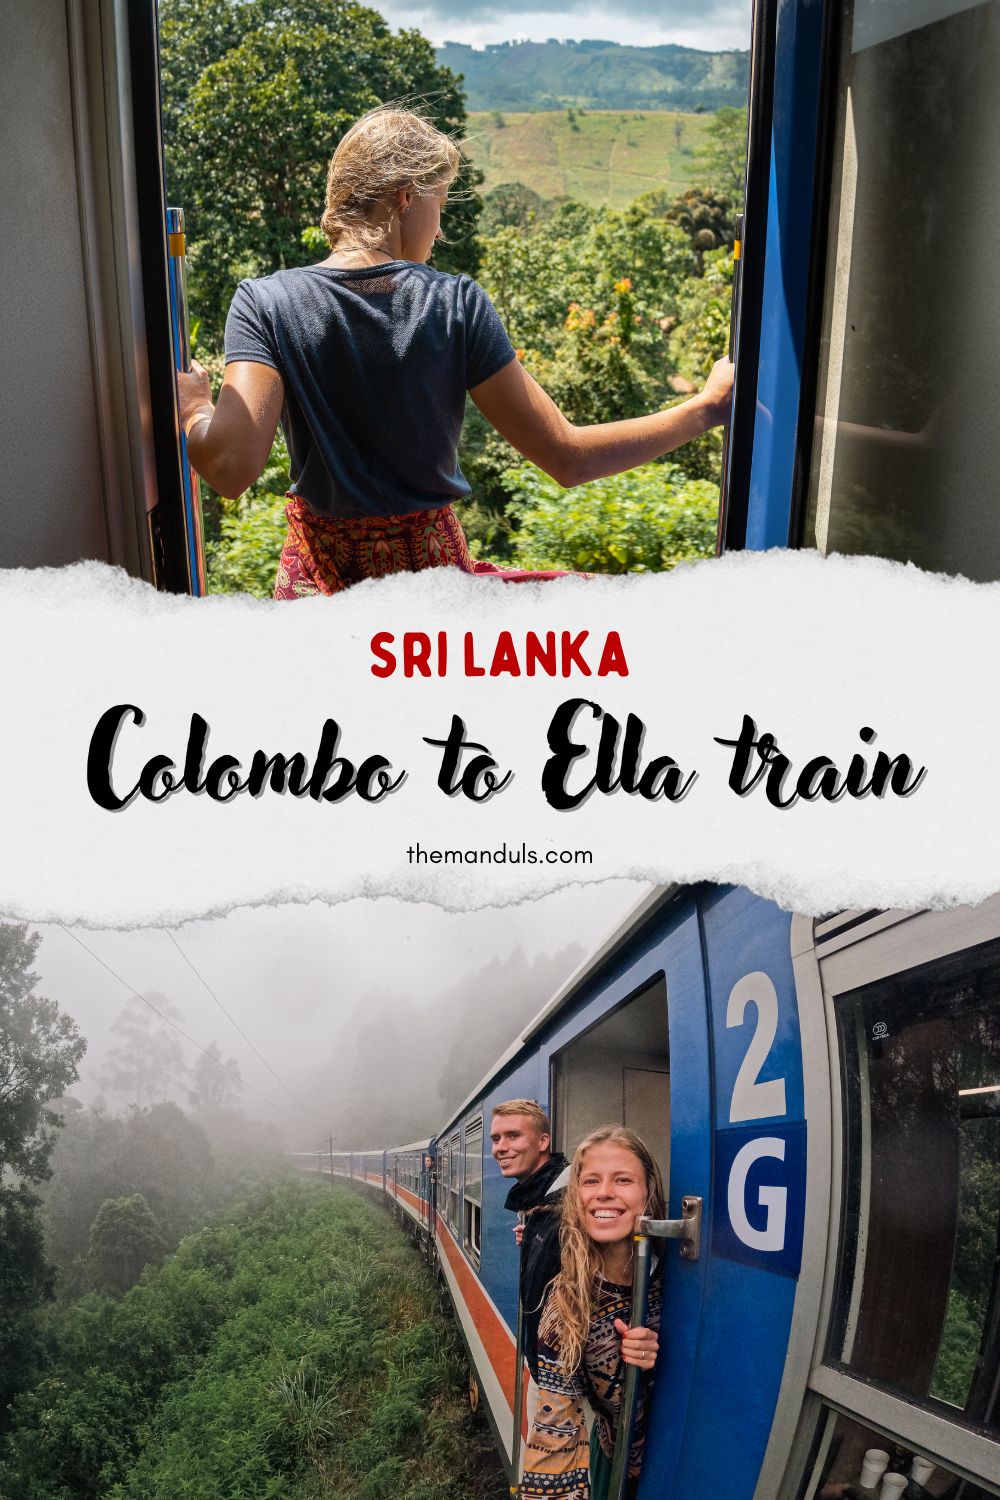 Colombo to Ella train Pinterest